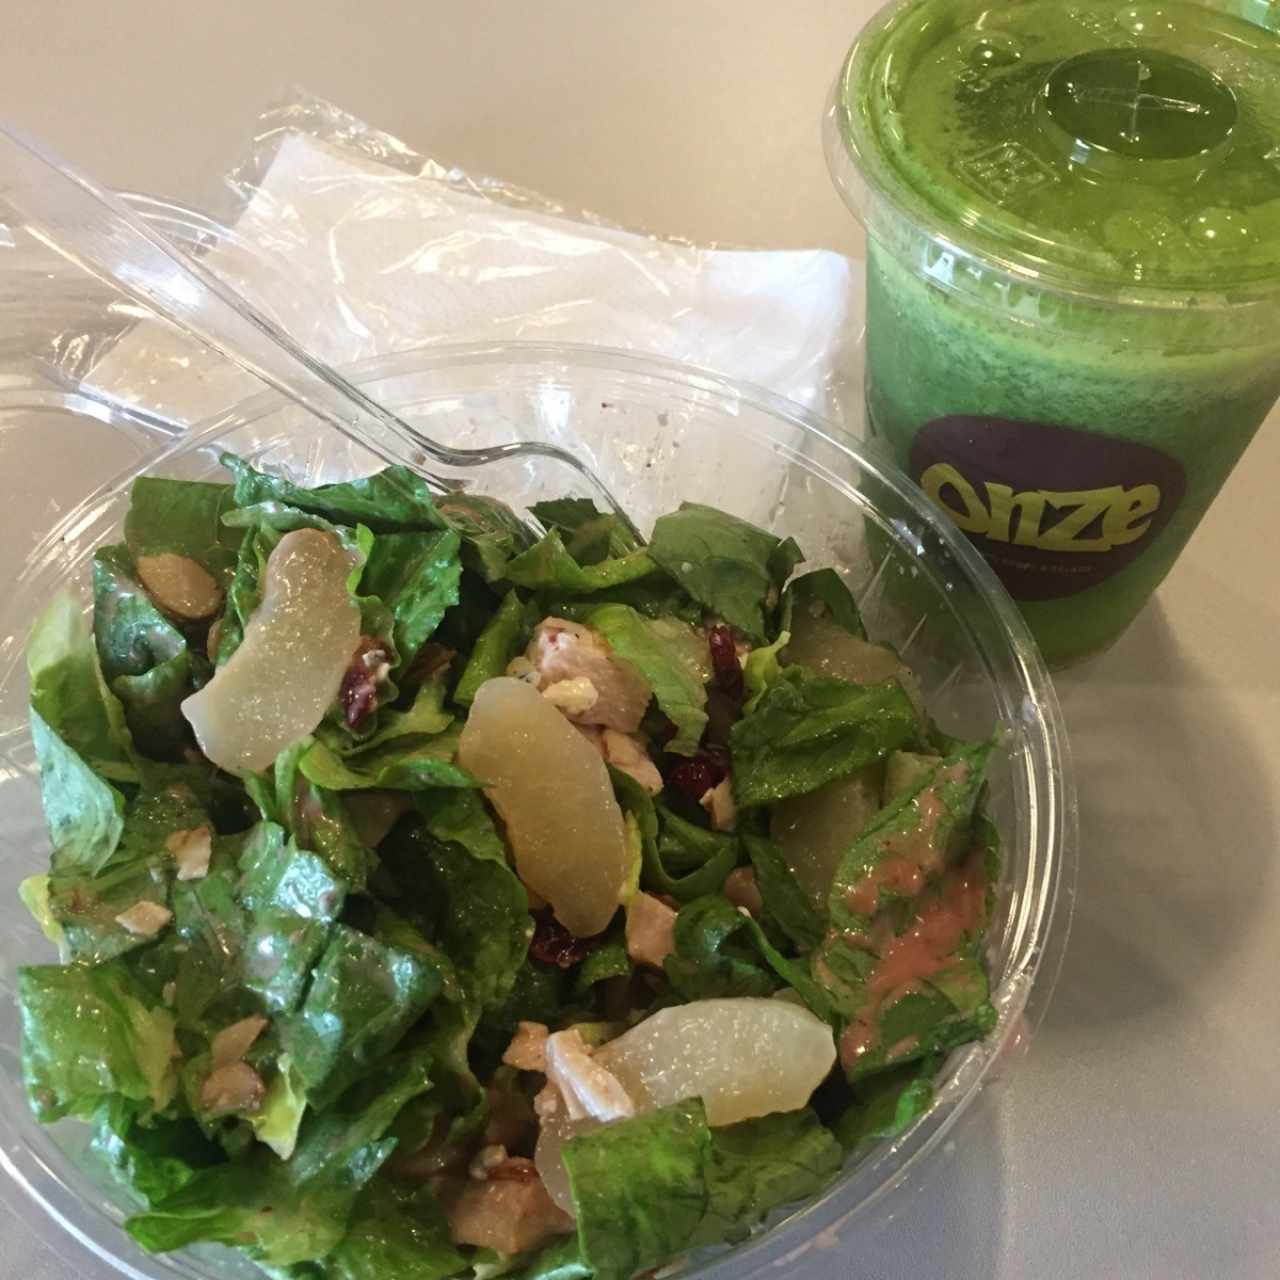 Summer salad & Green power juice